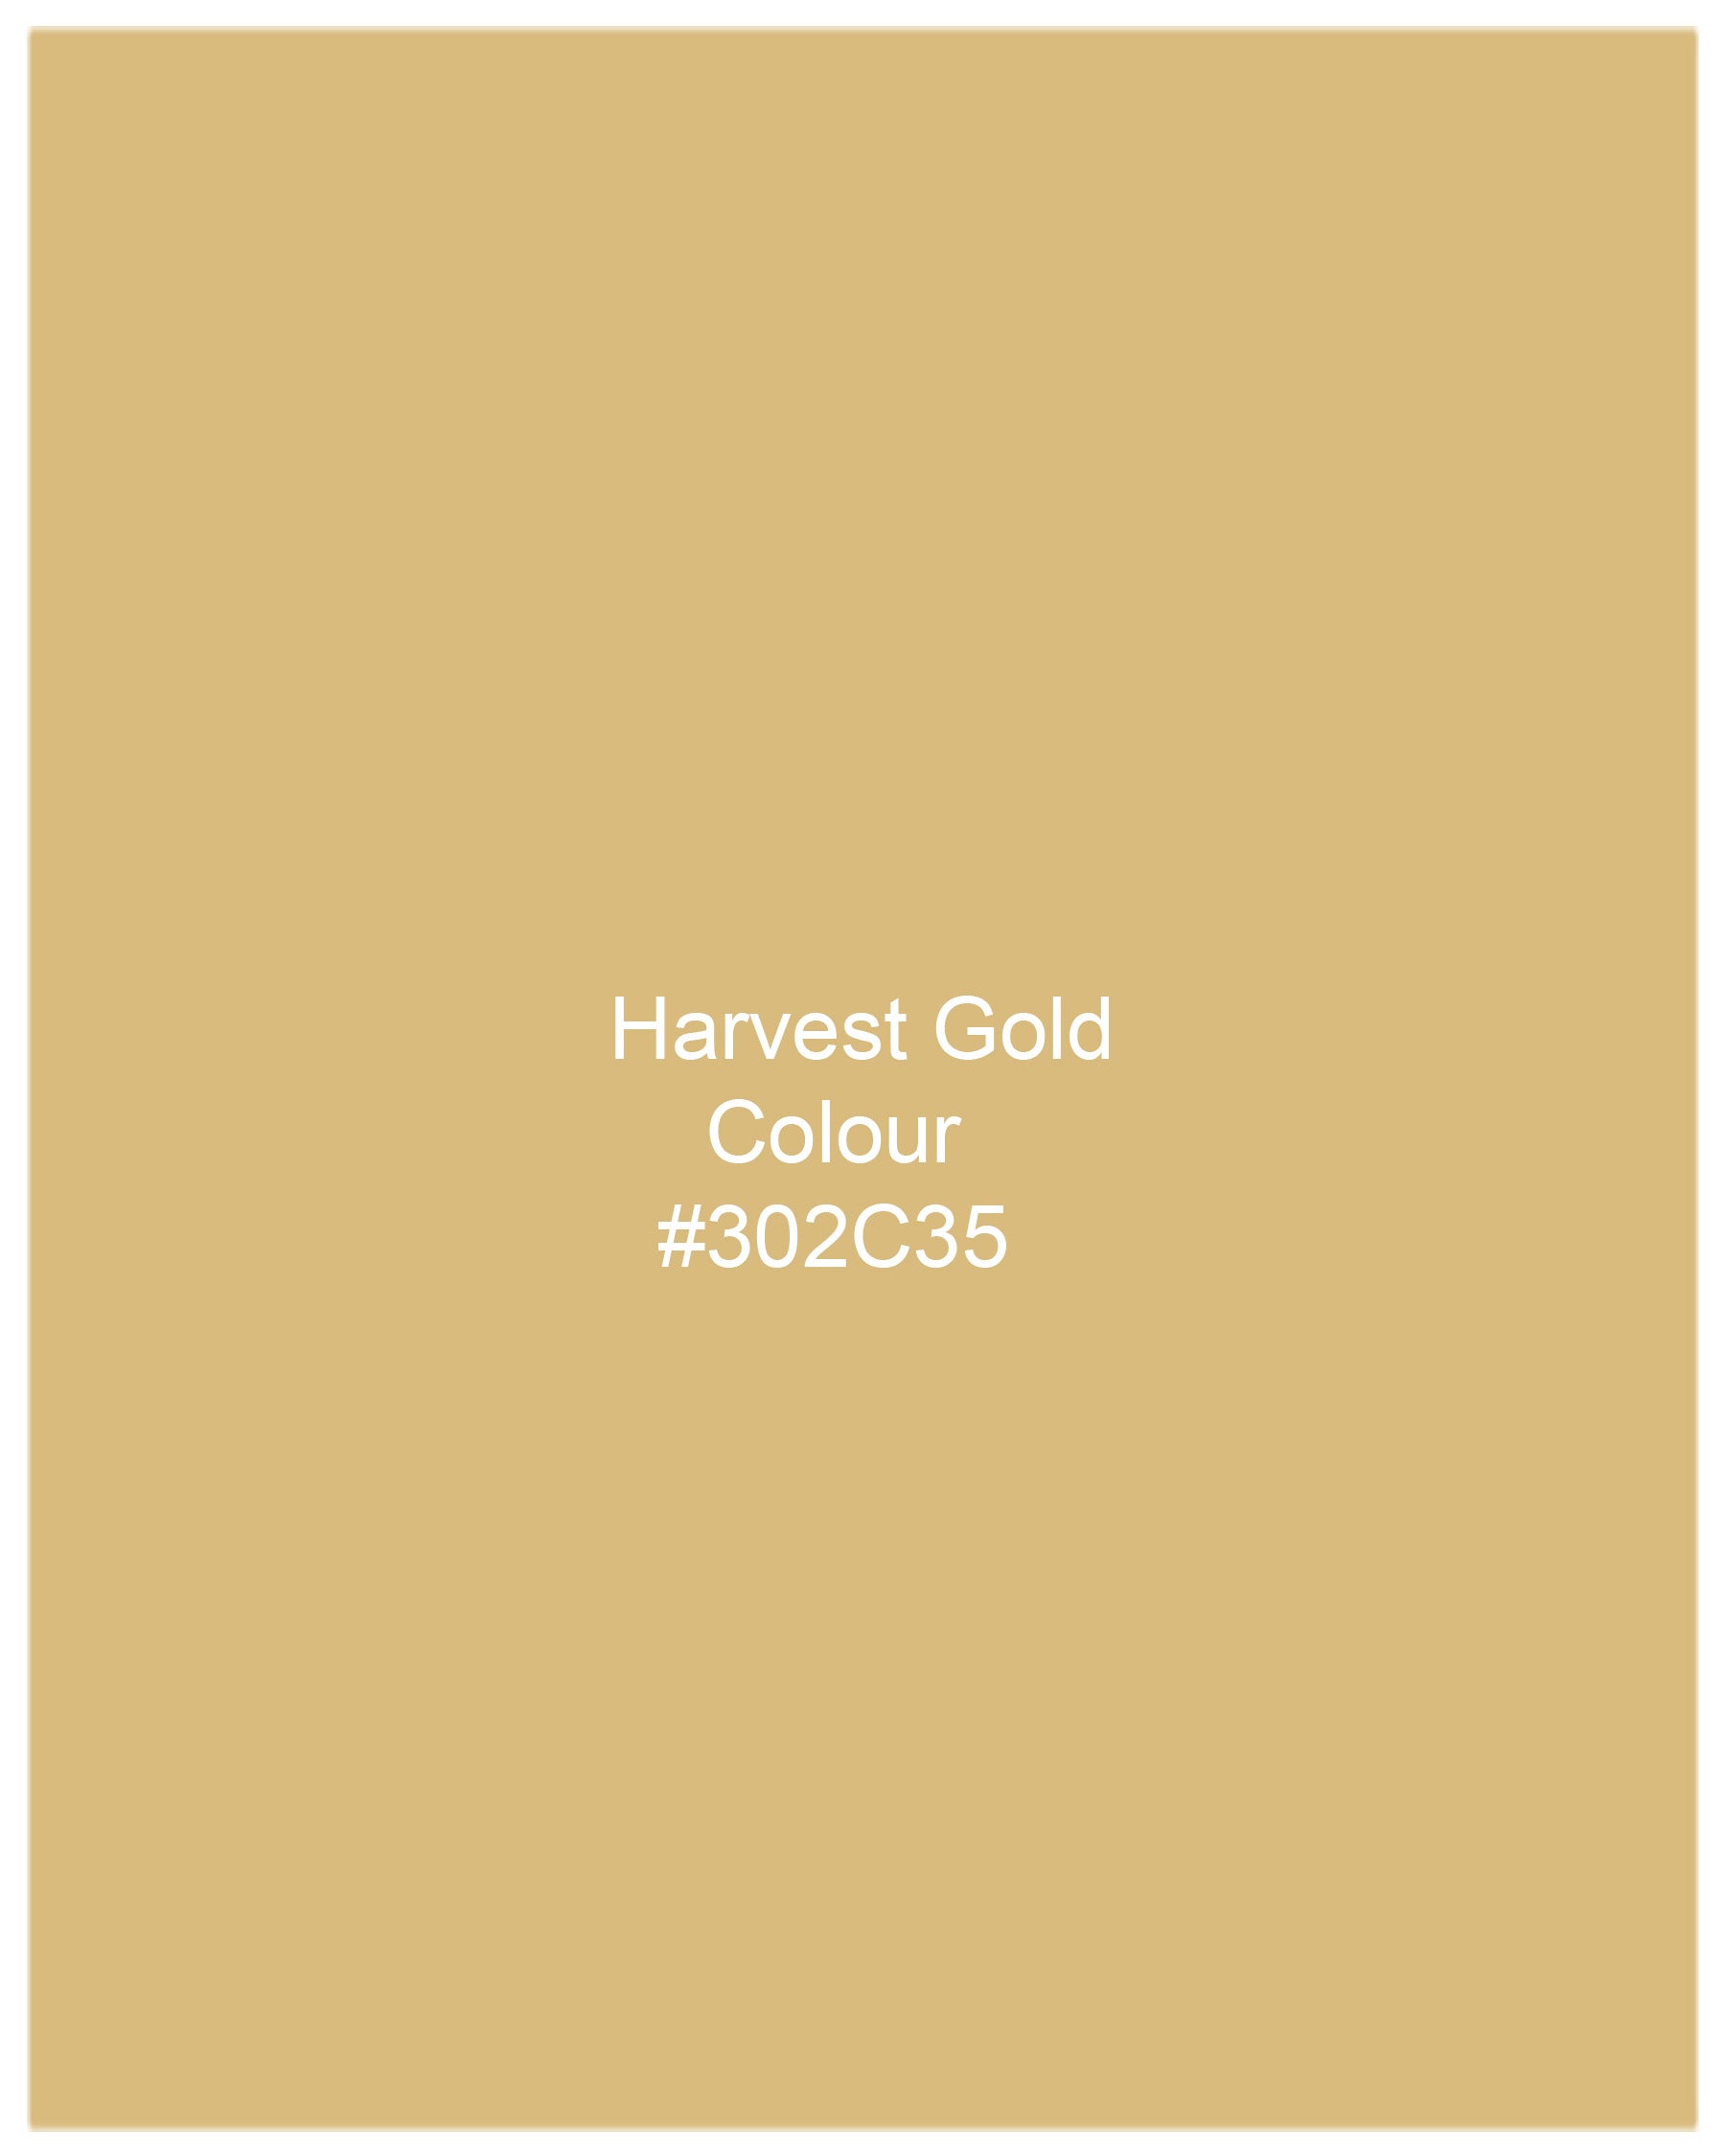 Harvest Gold Beige Dobby Textured Premium Giza Cotton Shirt 7696-38, 7696-H-38, 7696-39, 7696-H-39, 7696-40, 7696-H-40, 7696-42, 7696-H-42, 7696-44, 7696-H-44, 7696-46, 7696-H-46, 7696-48, 7696-H-48, 7696-50, 7696-H-50, 7696-52, 7696-H-52